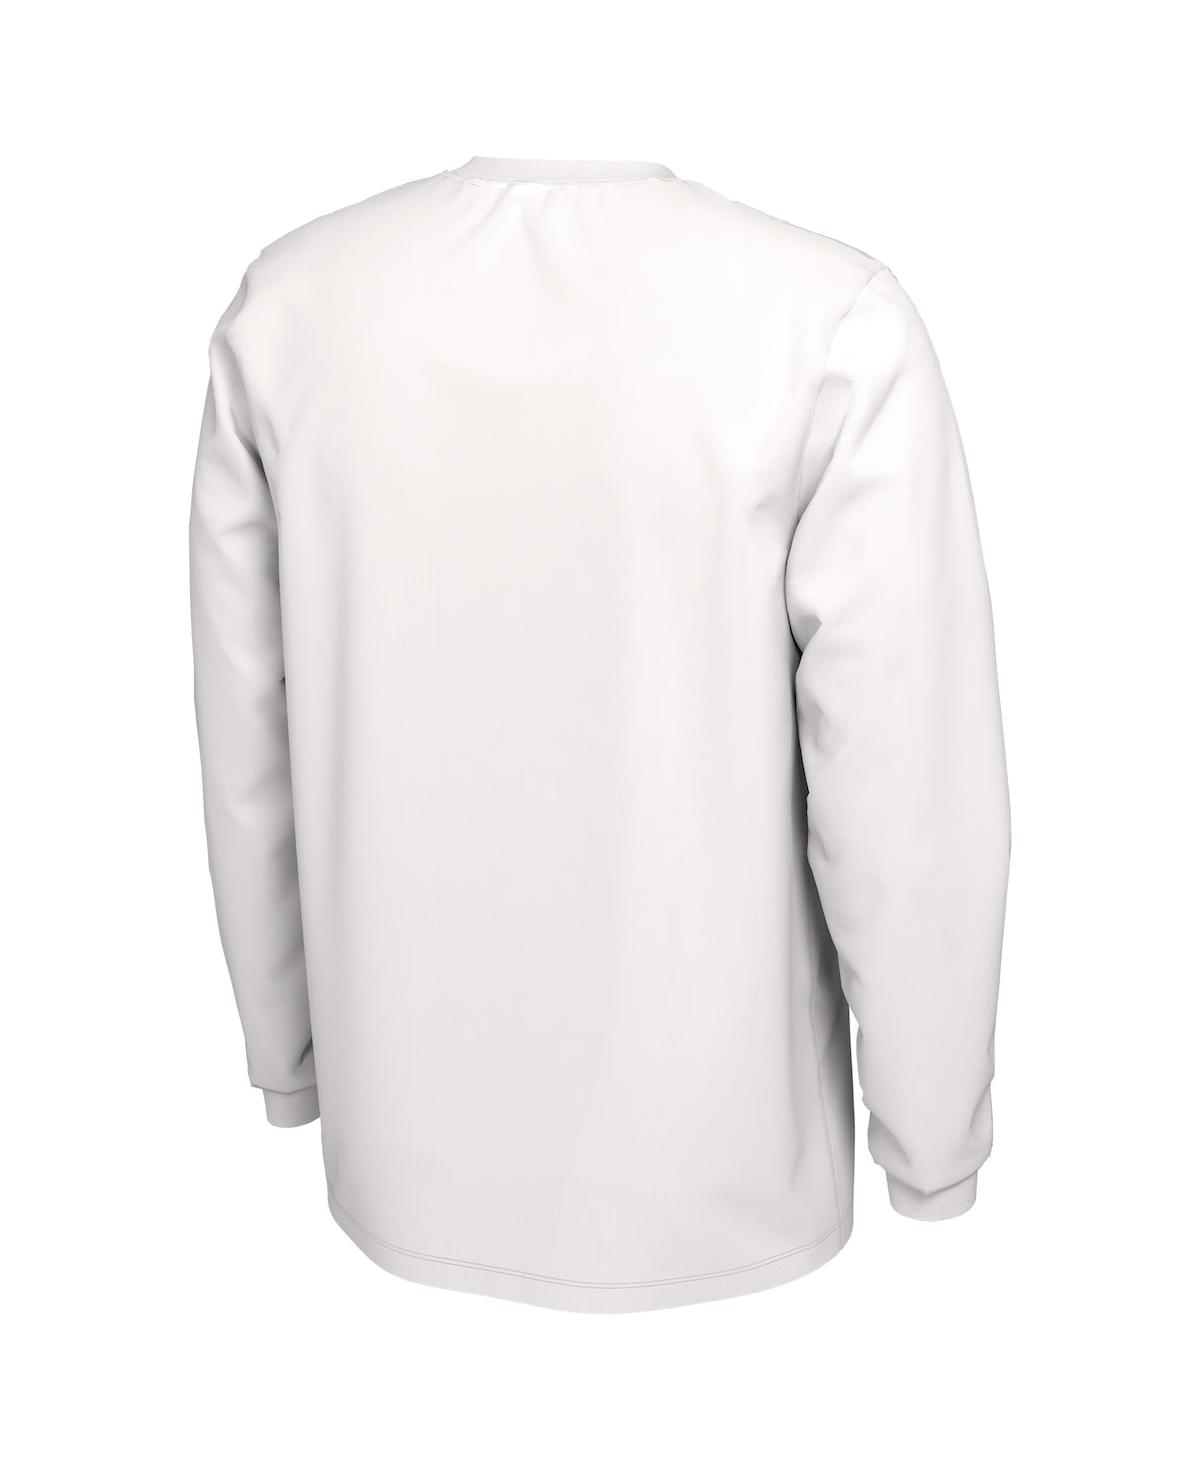 Shop Nike Men's  White Alabama Crimson Tide Ball In Bench Long Sleeve T-shirt